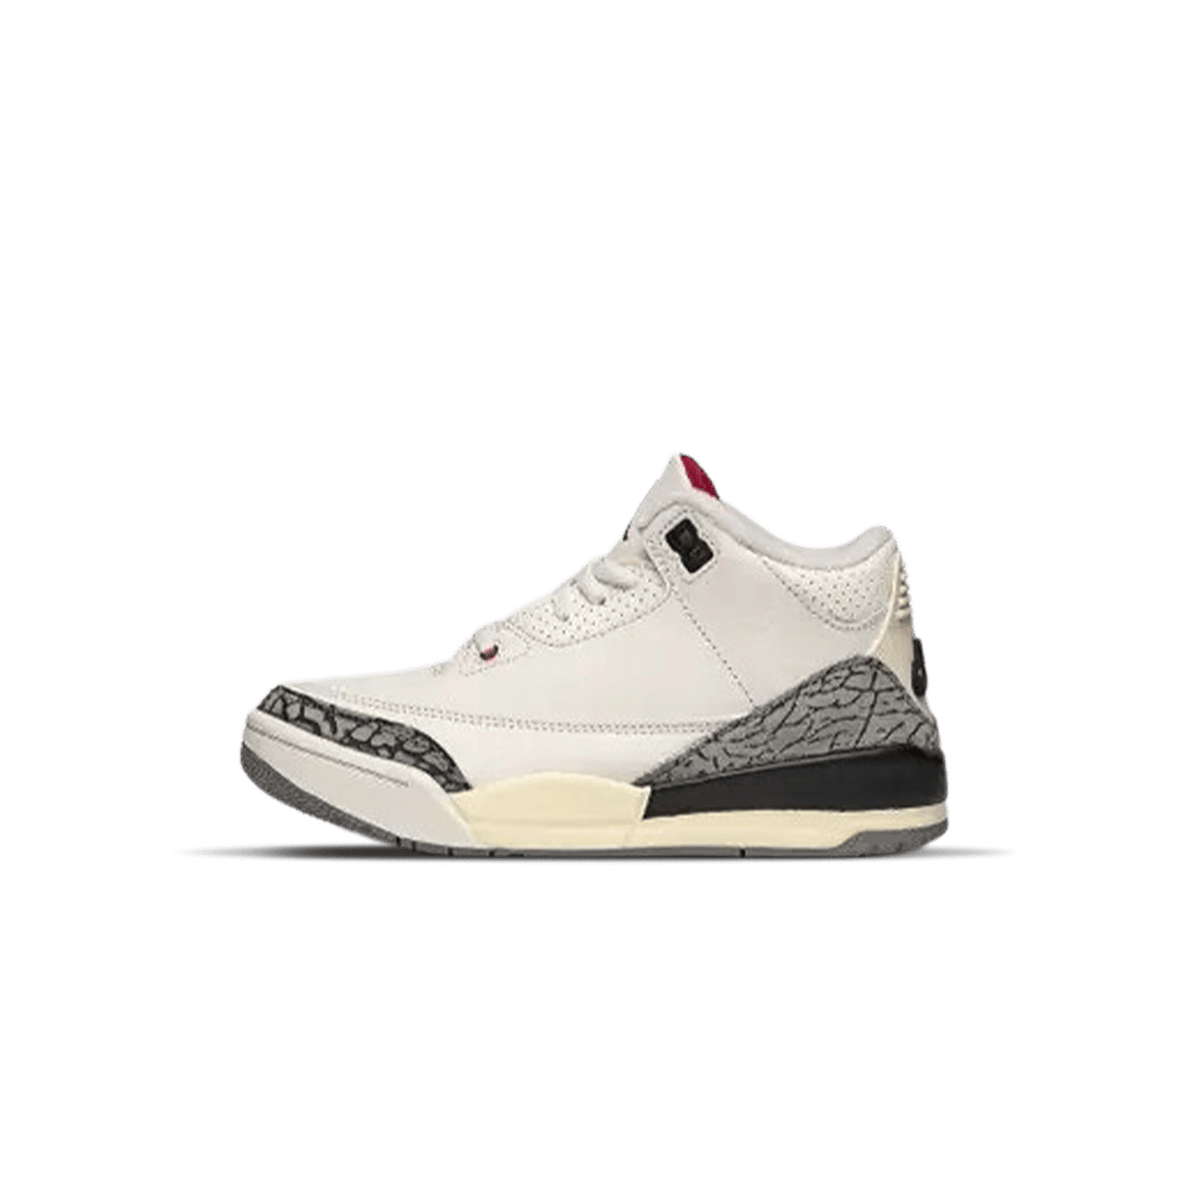 Nike Air Jordan 4 Wntr Loyal Blue Black White Sneakers Shoe Retro PS 'White Cement Reimagined' - UrlfreezeShops